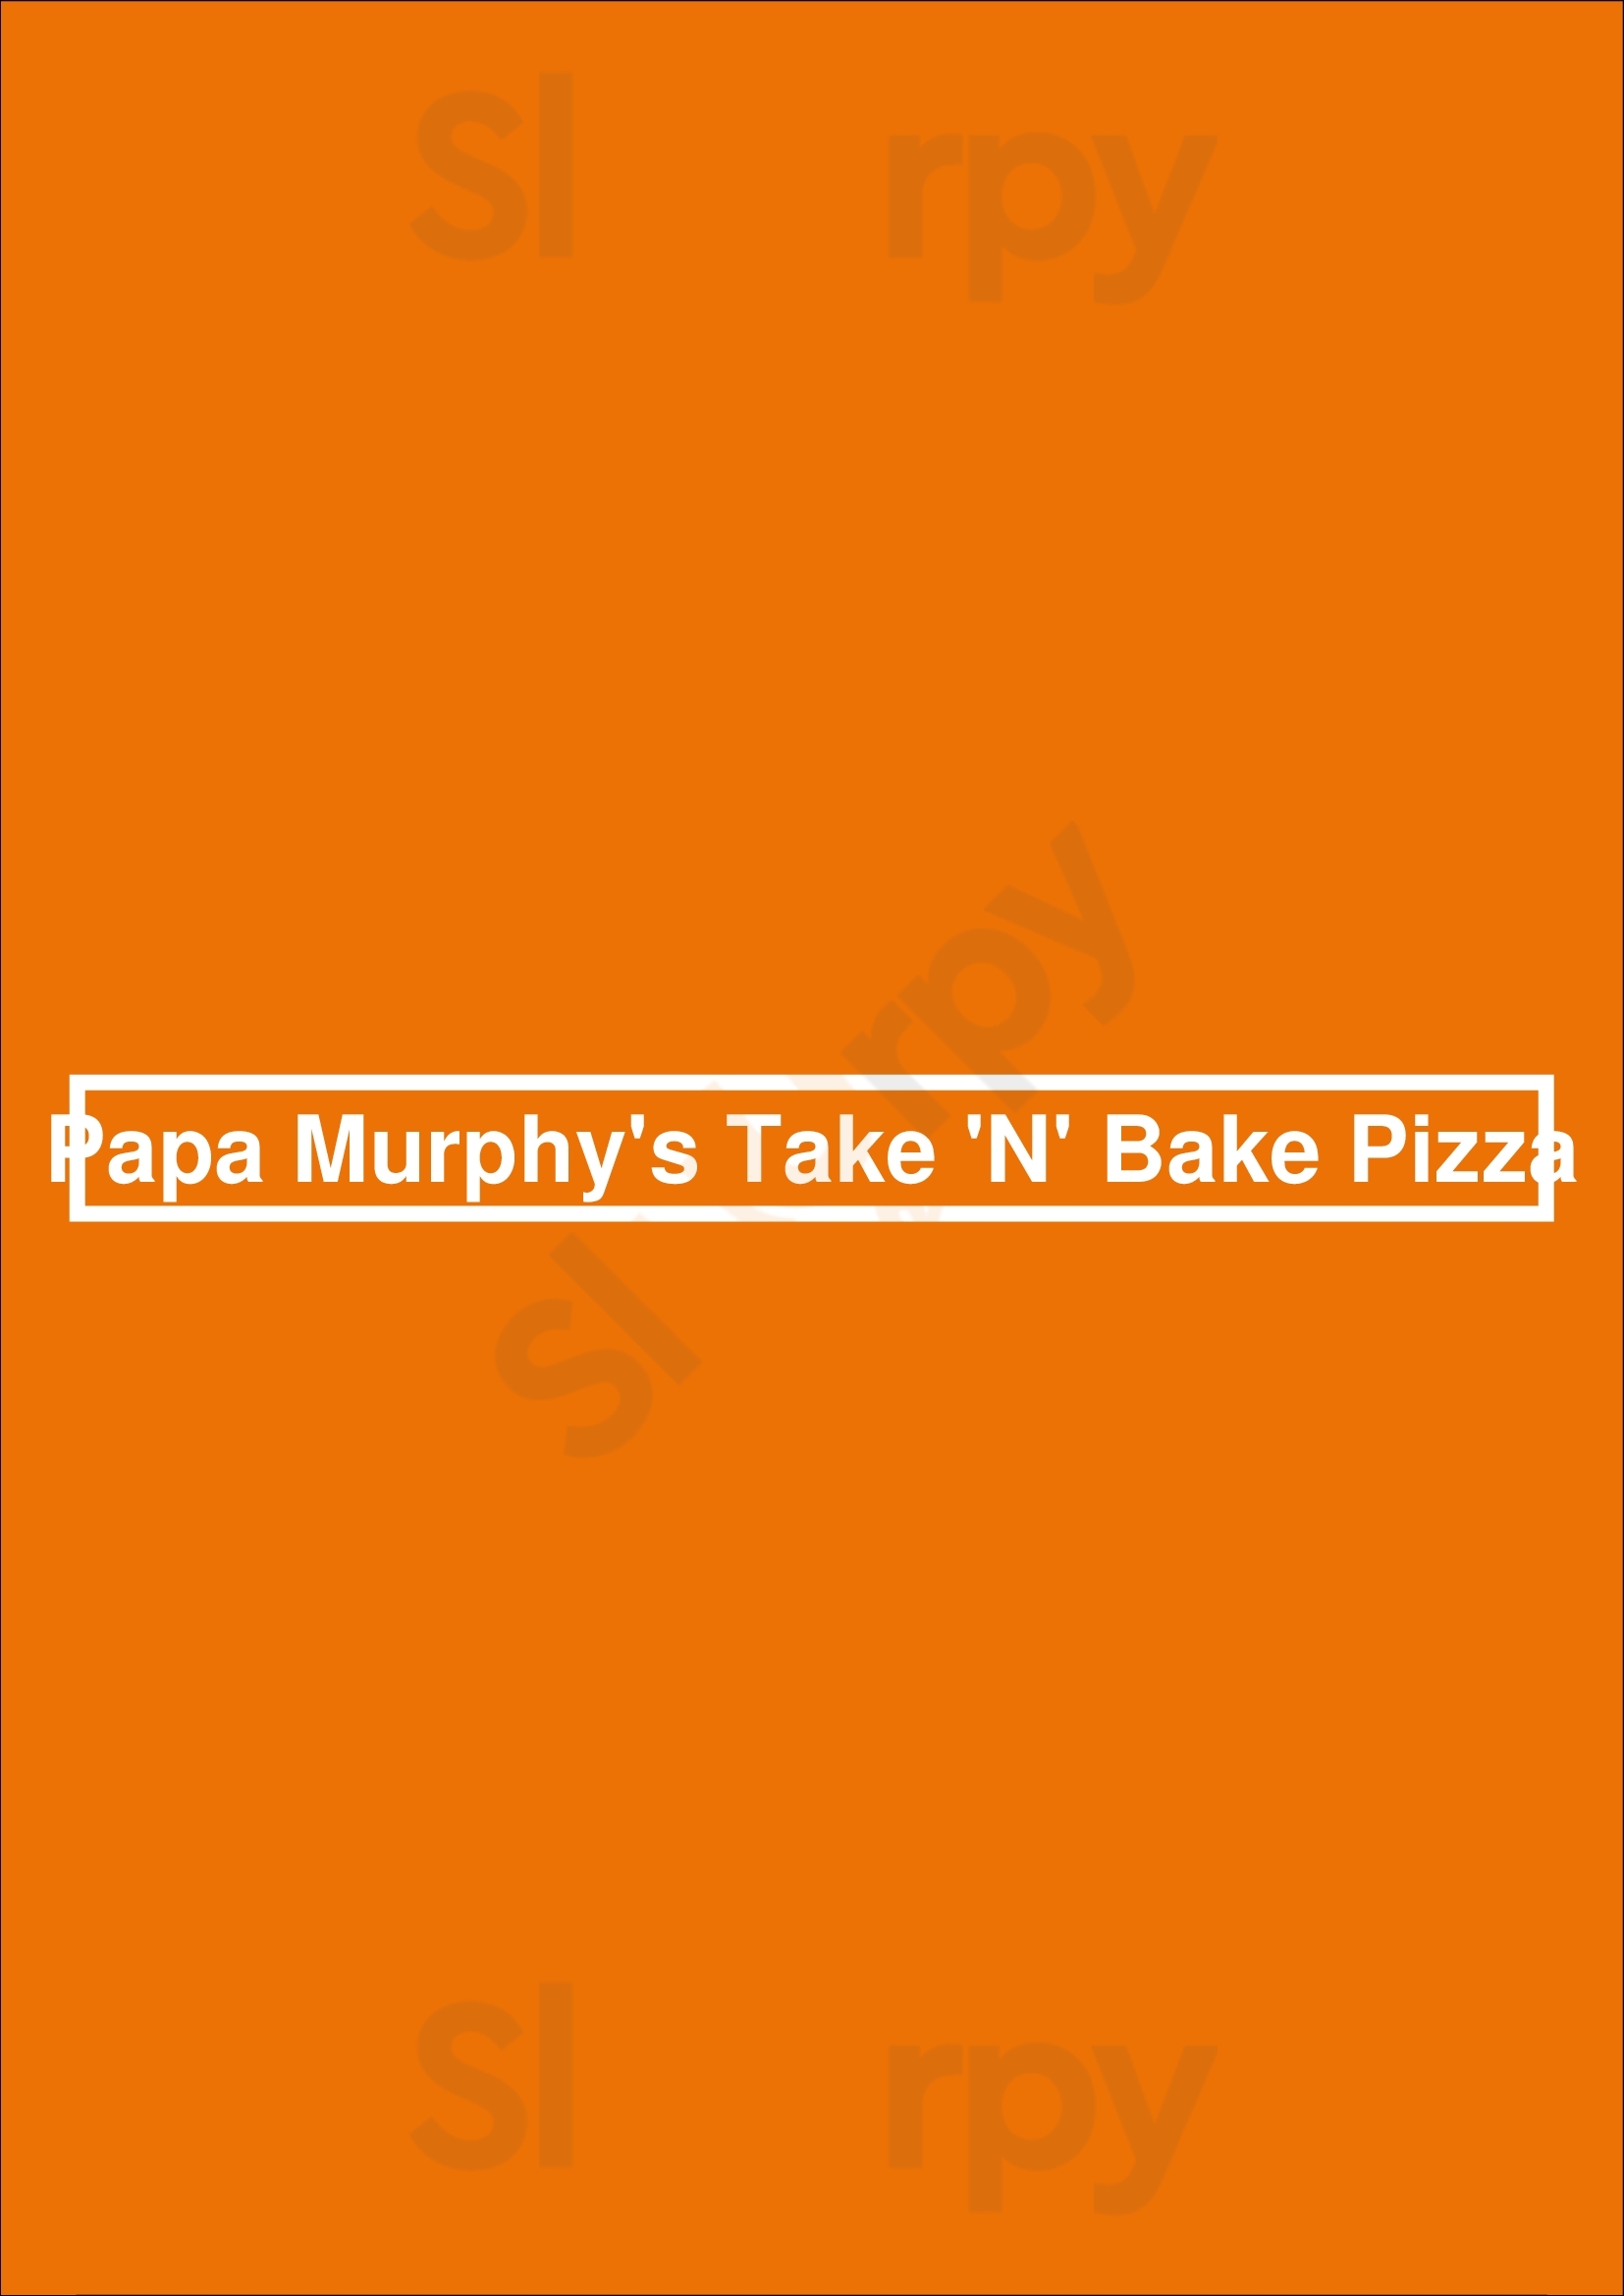 Papa Murphy's Take 'n' Bake Pizza Reno Menu - 1